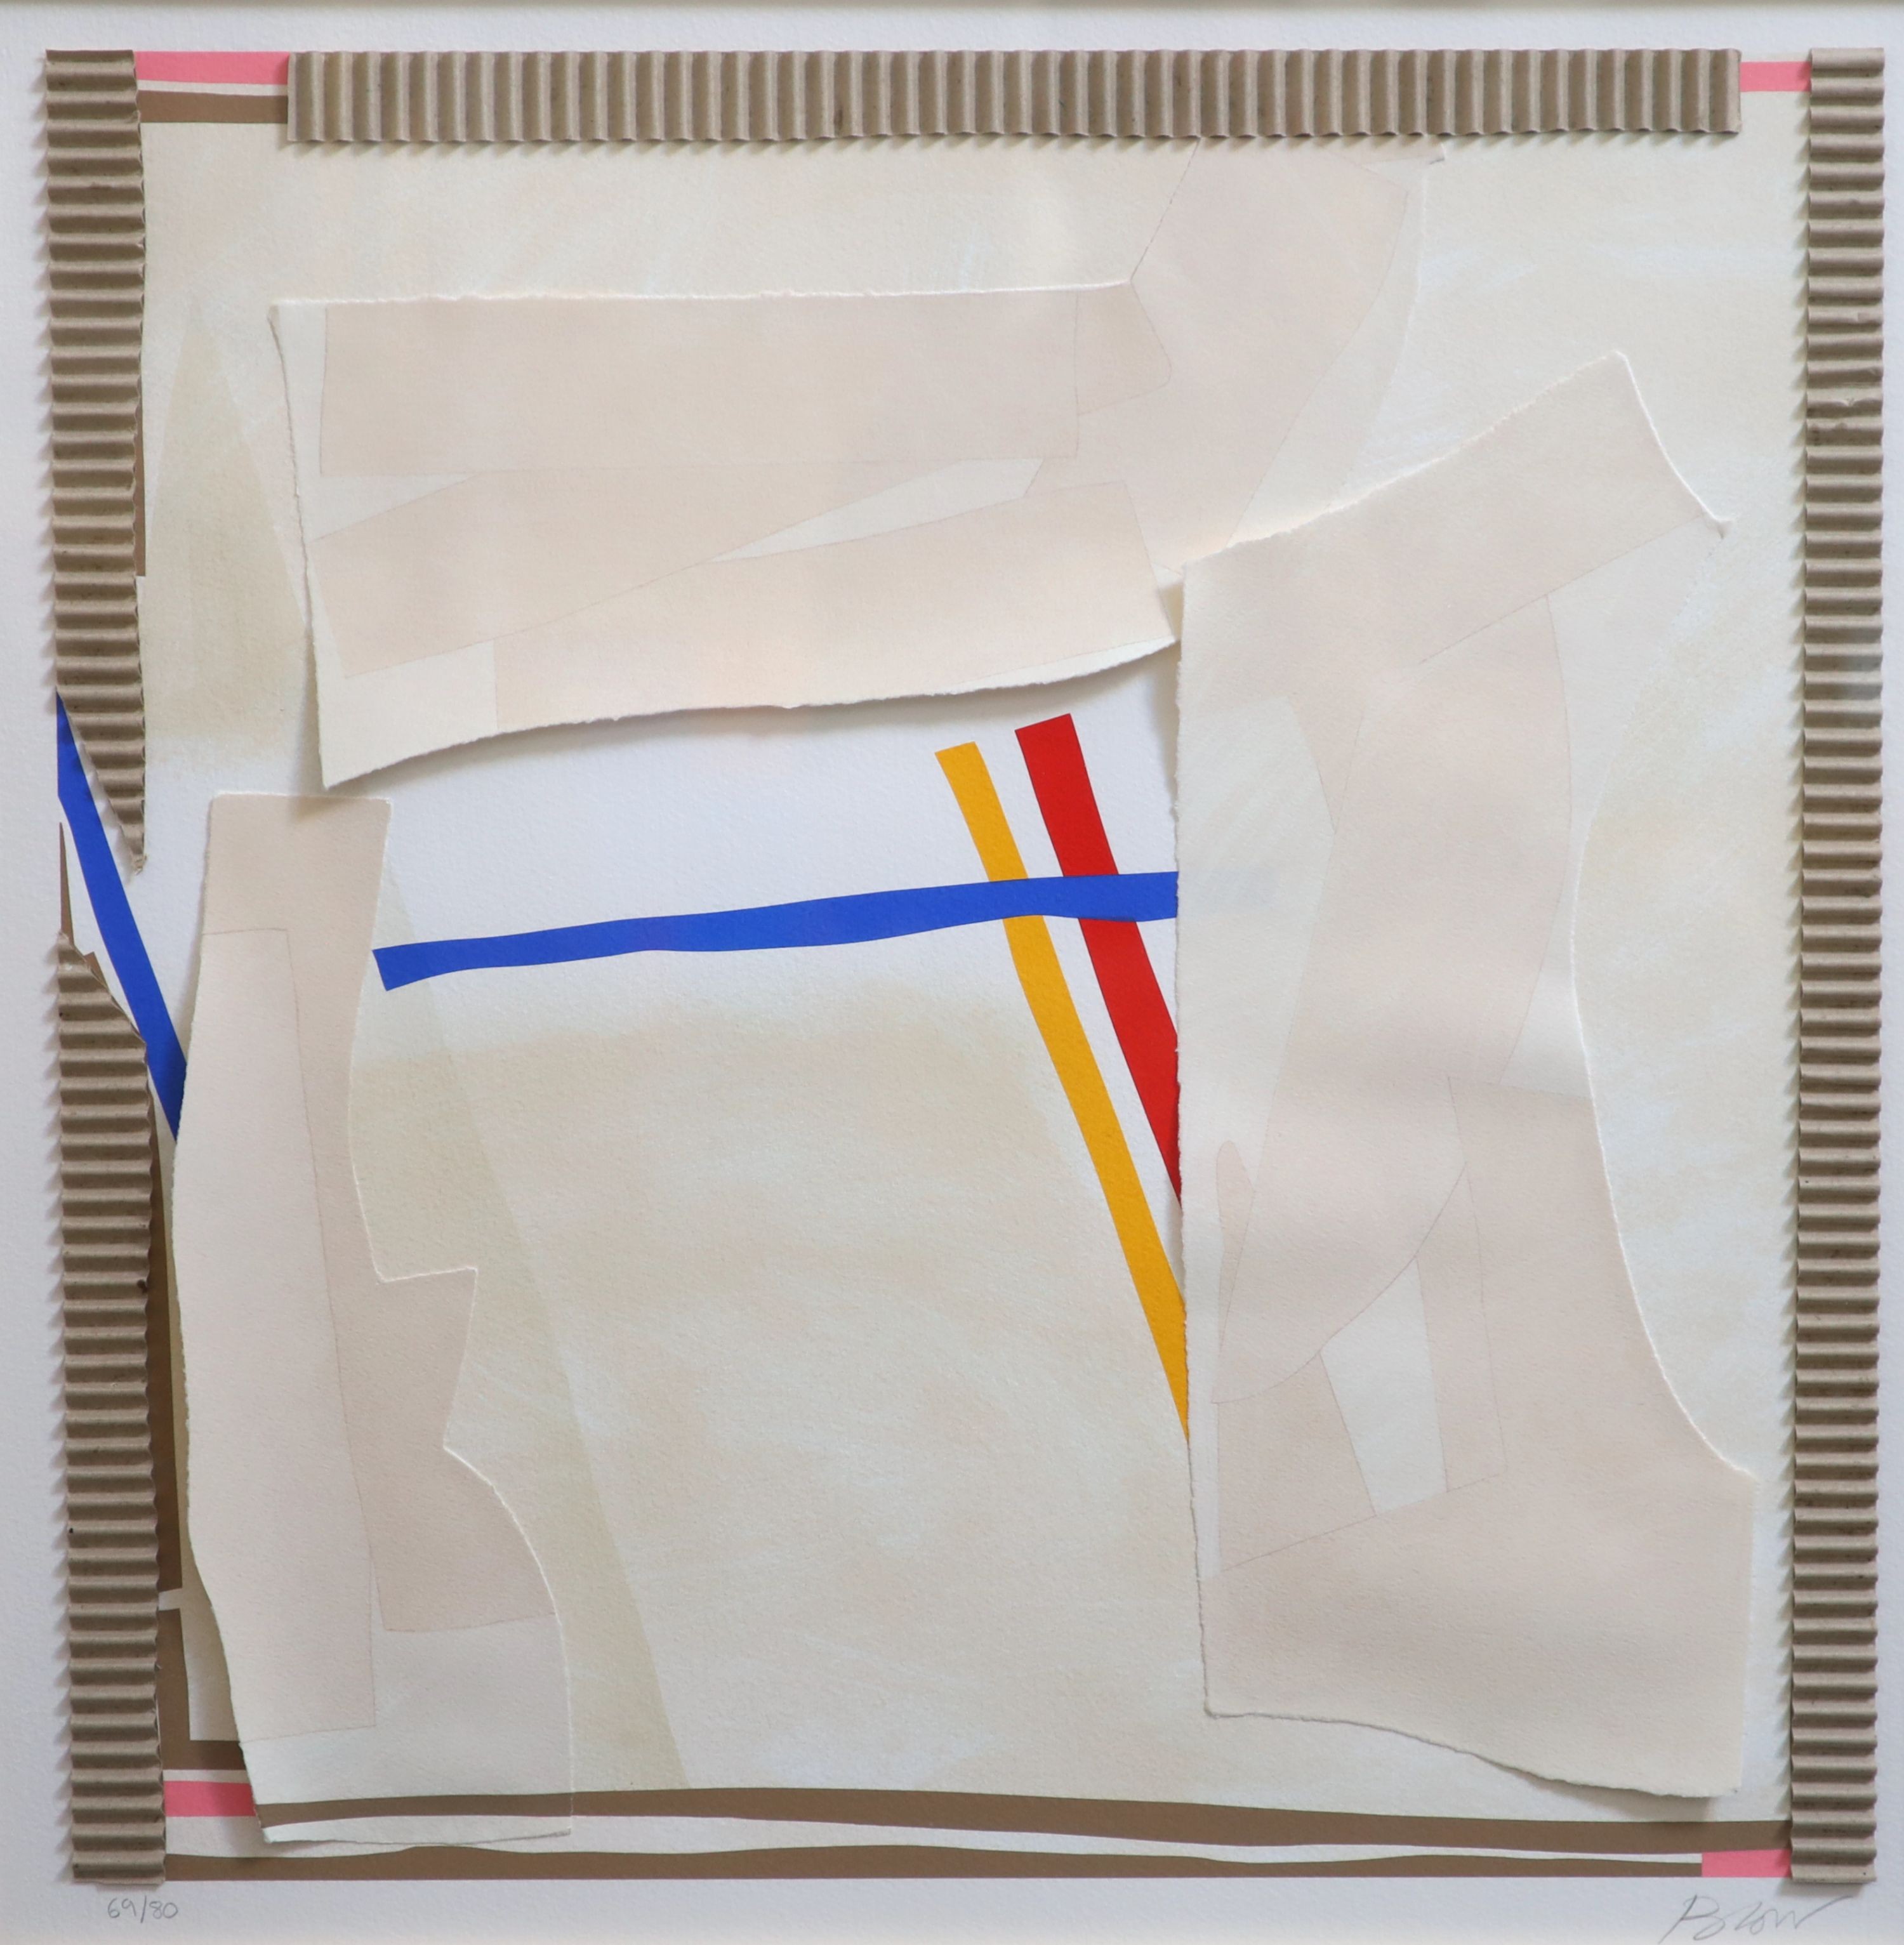 Sandra Blow R.A. (1925-2006), Rilievo, 2005, silkscreen on wove with collage elements, 55 x 55cm.